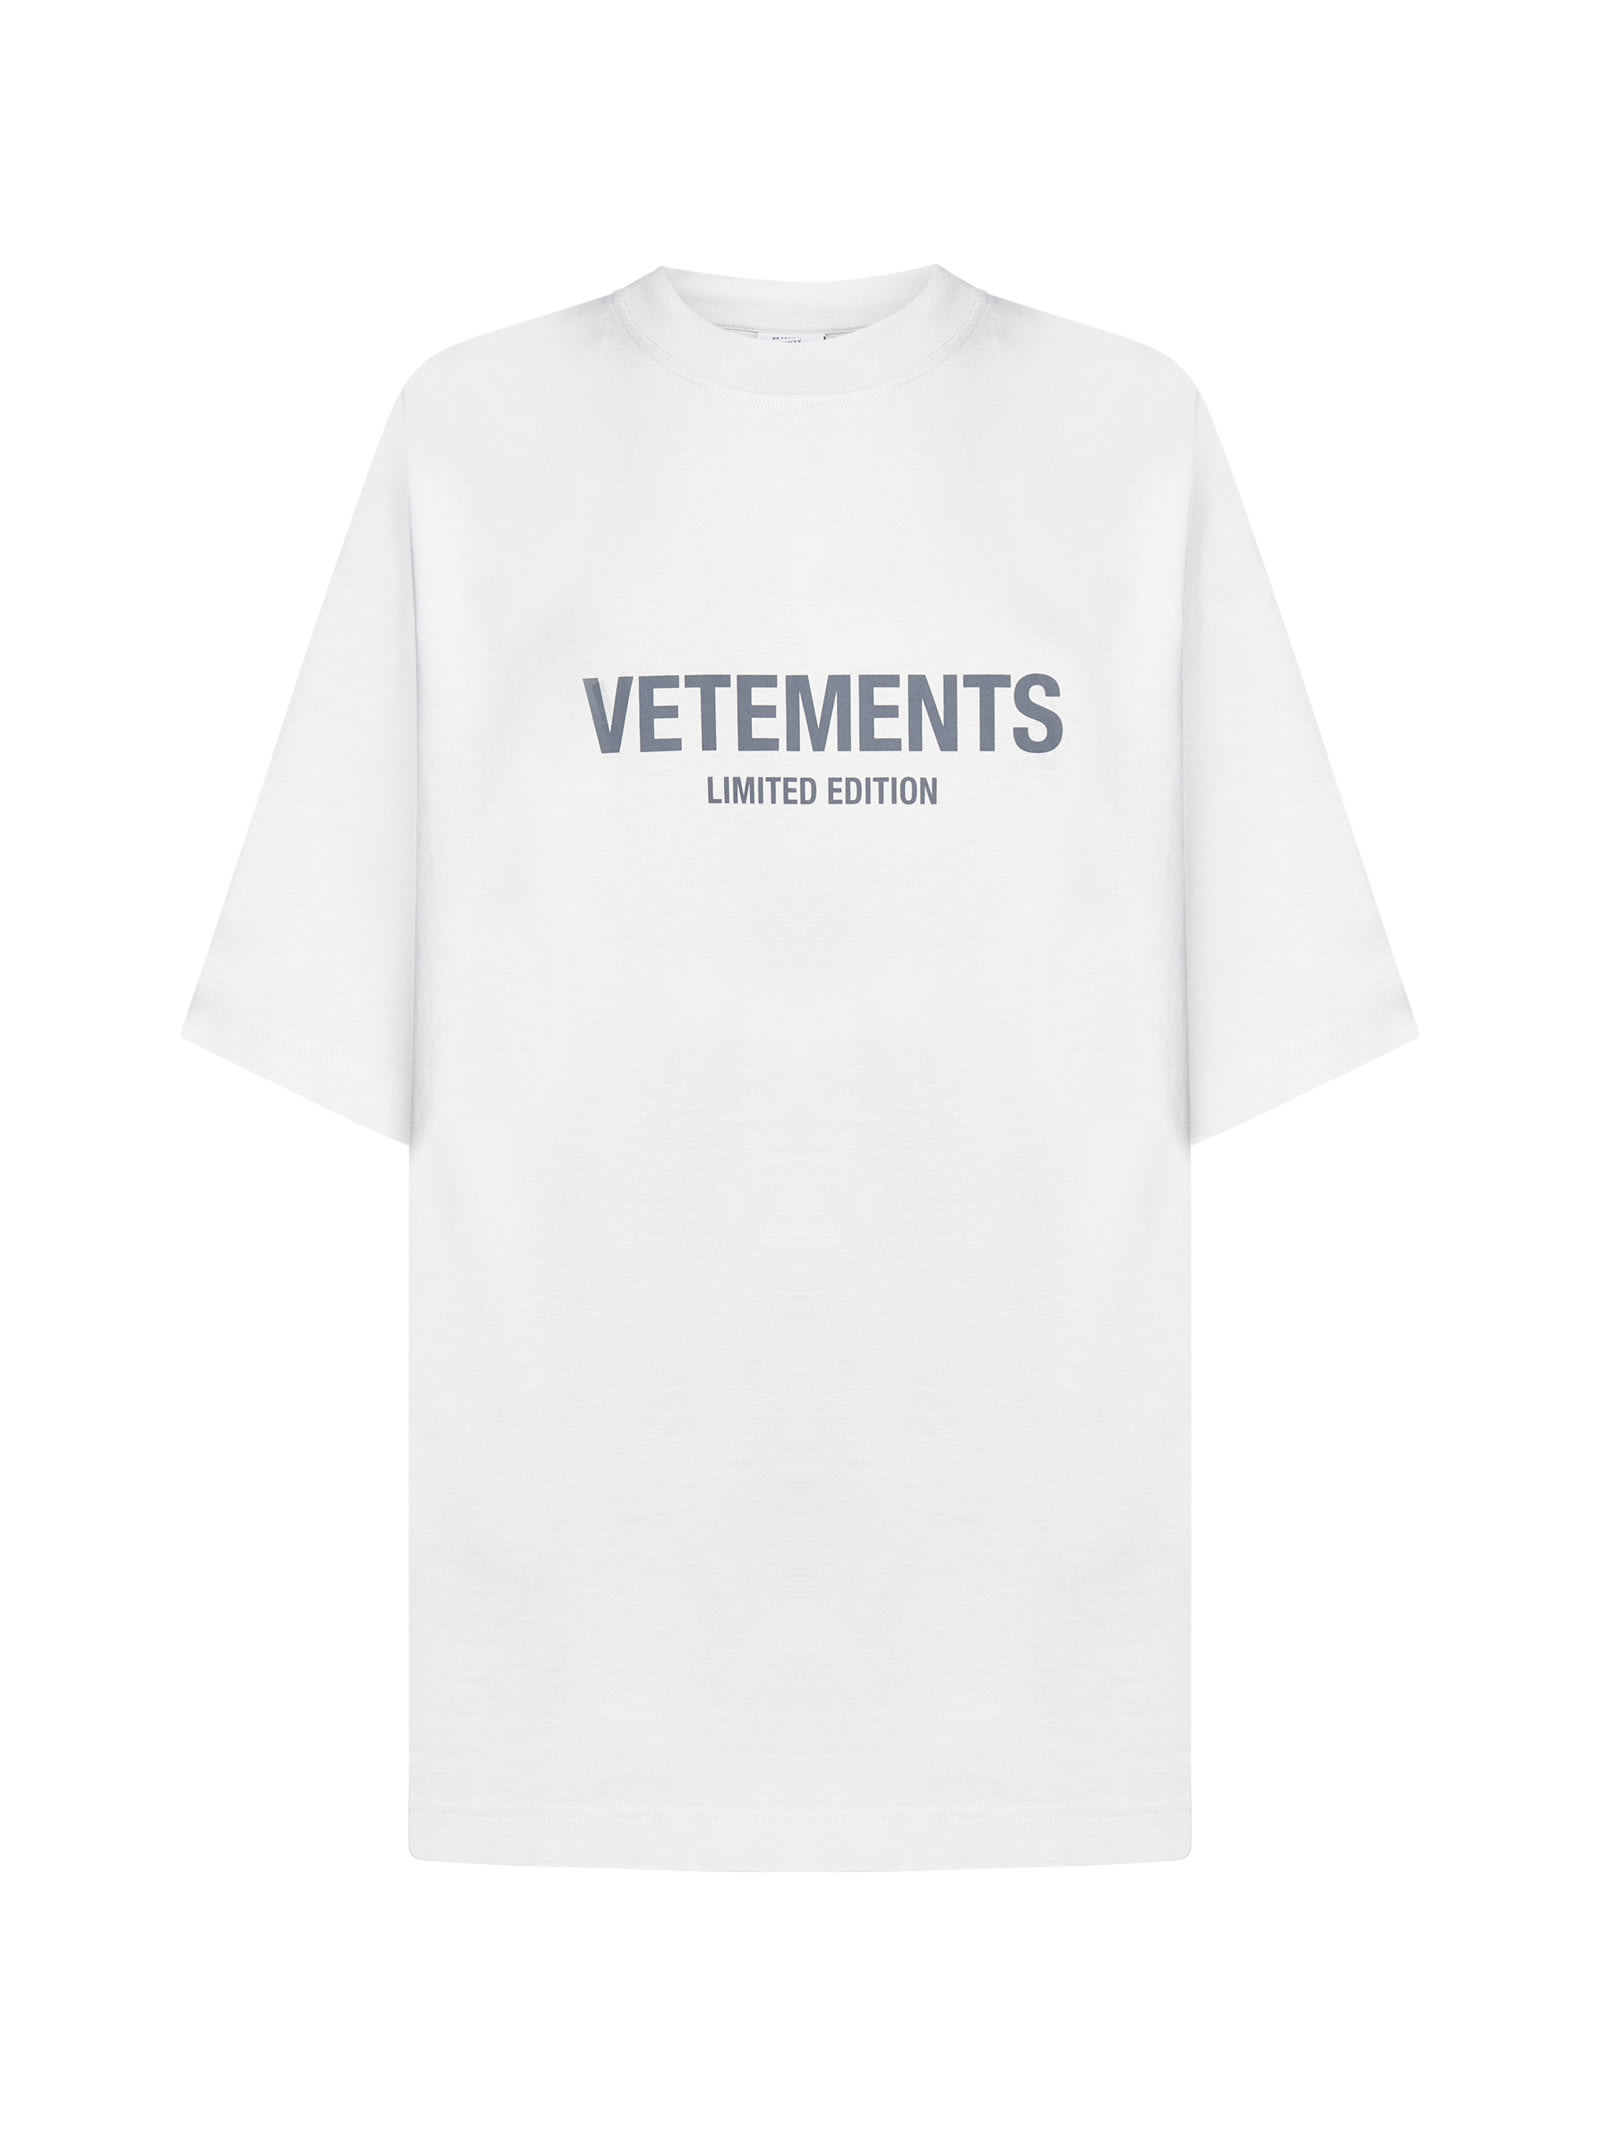 VETEMENTS T-Shirts for Women | ModeSens